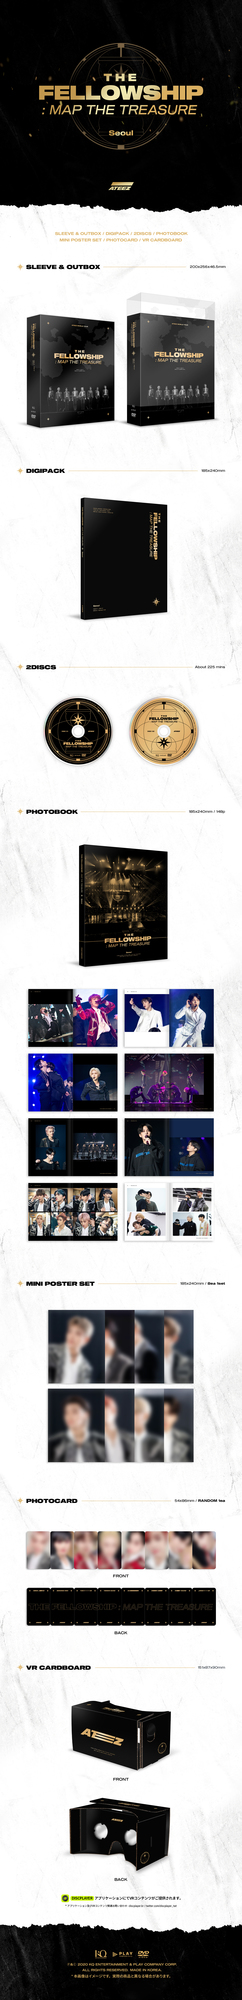 ATEEZ WORLD TOUR THE FELLOWSHIP : MAP THE TREASURE SEOUL DVD 